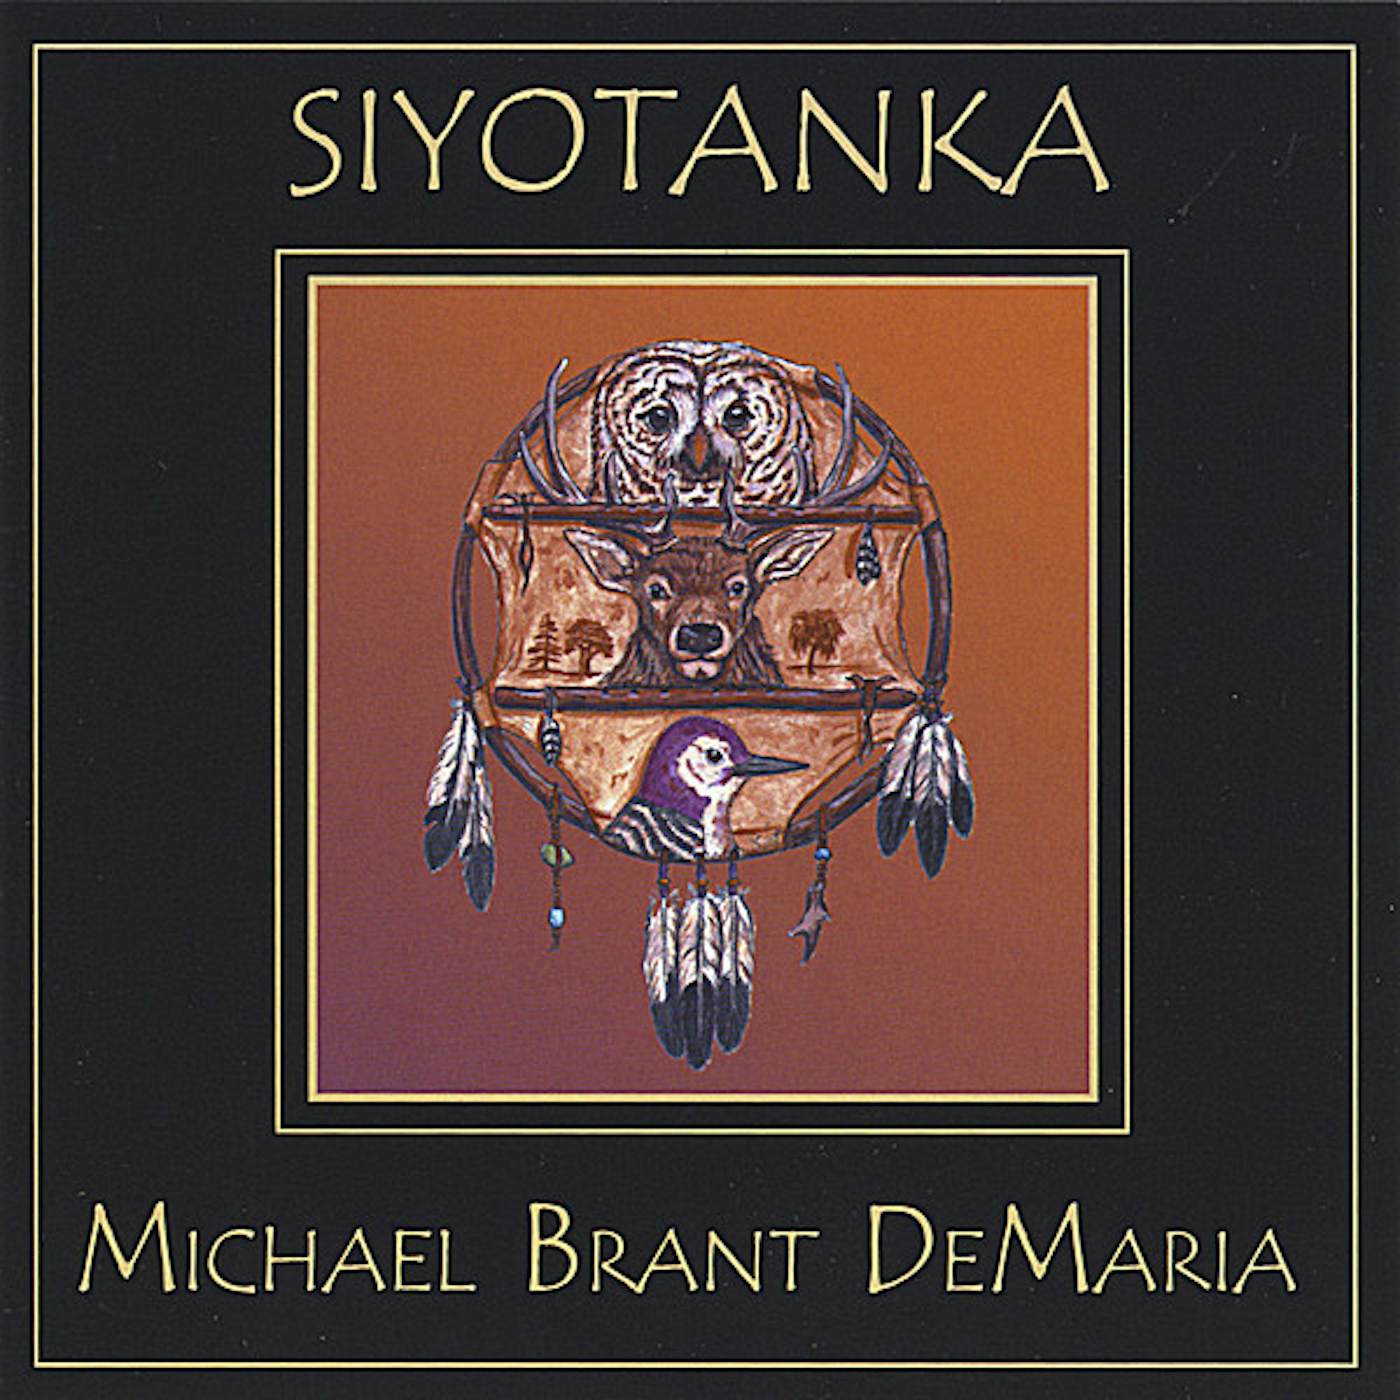 Michael Brant DeMaria SIYOTANKA CD